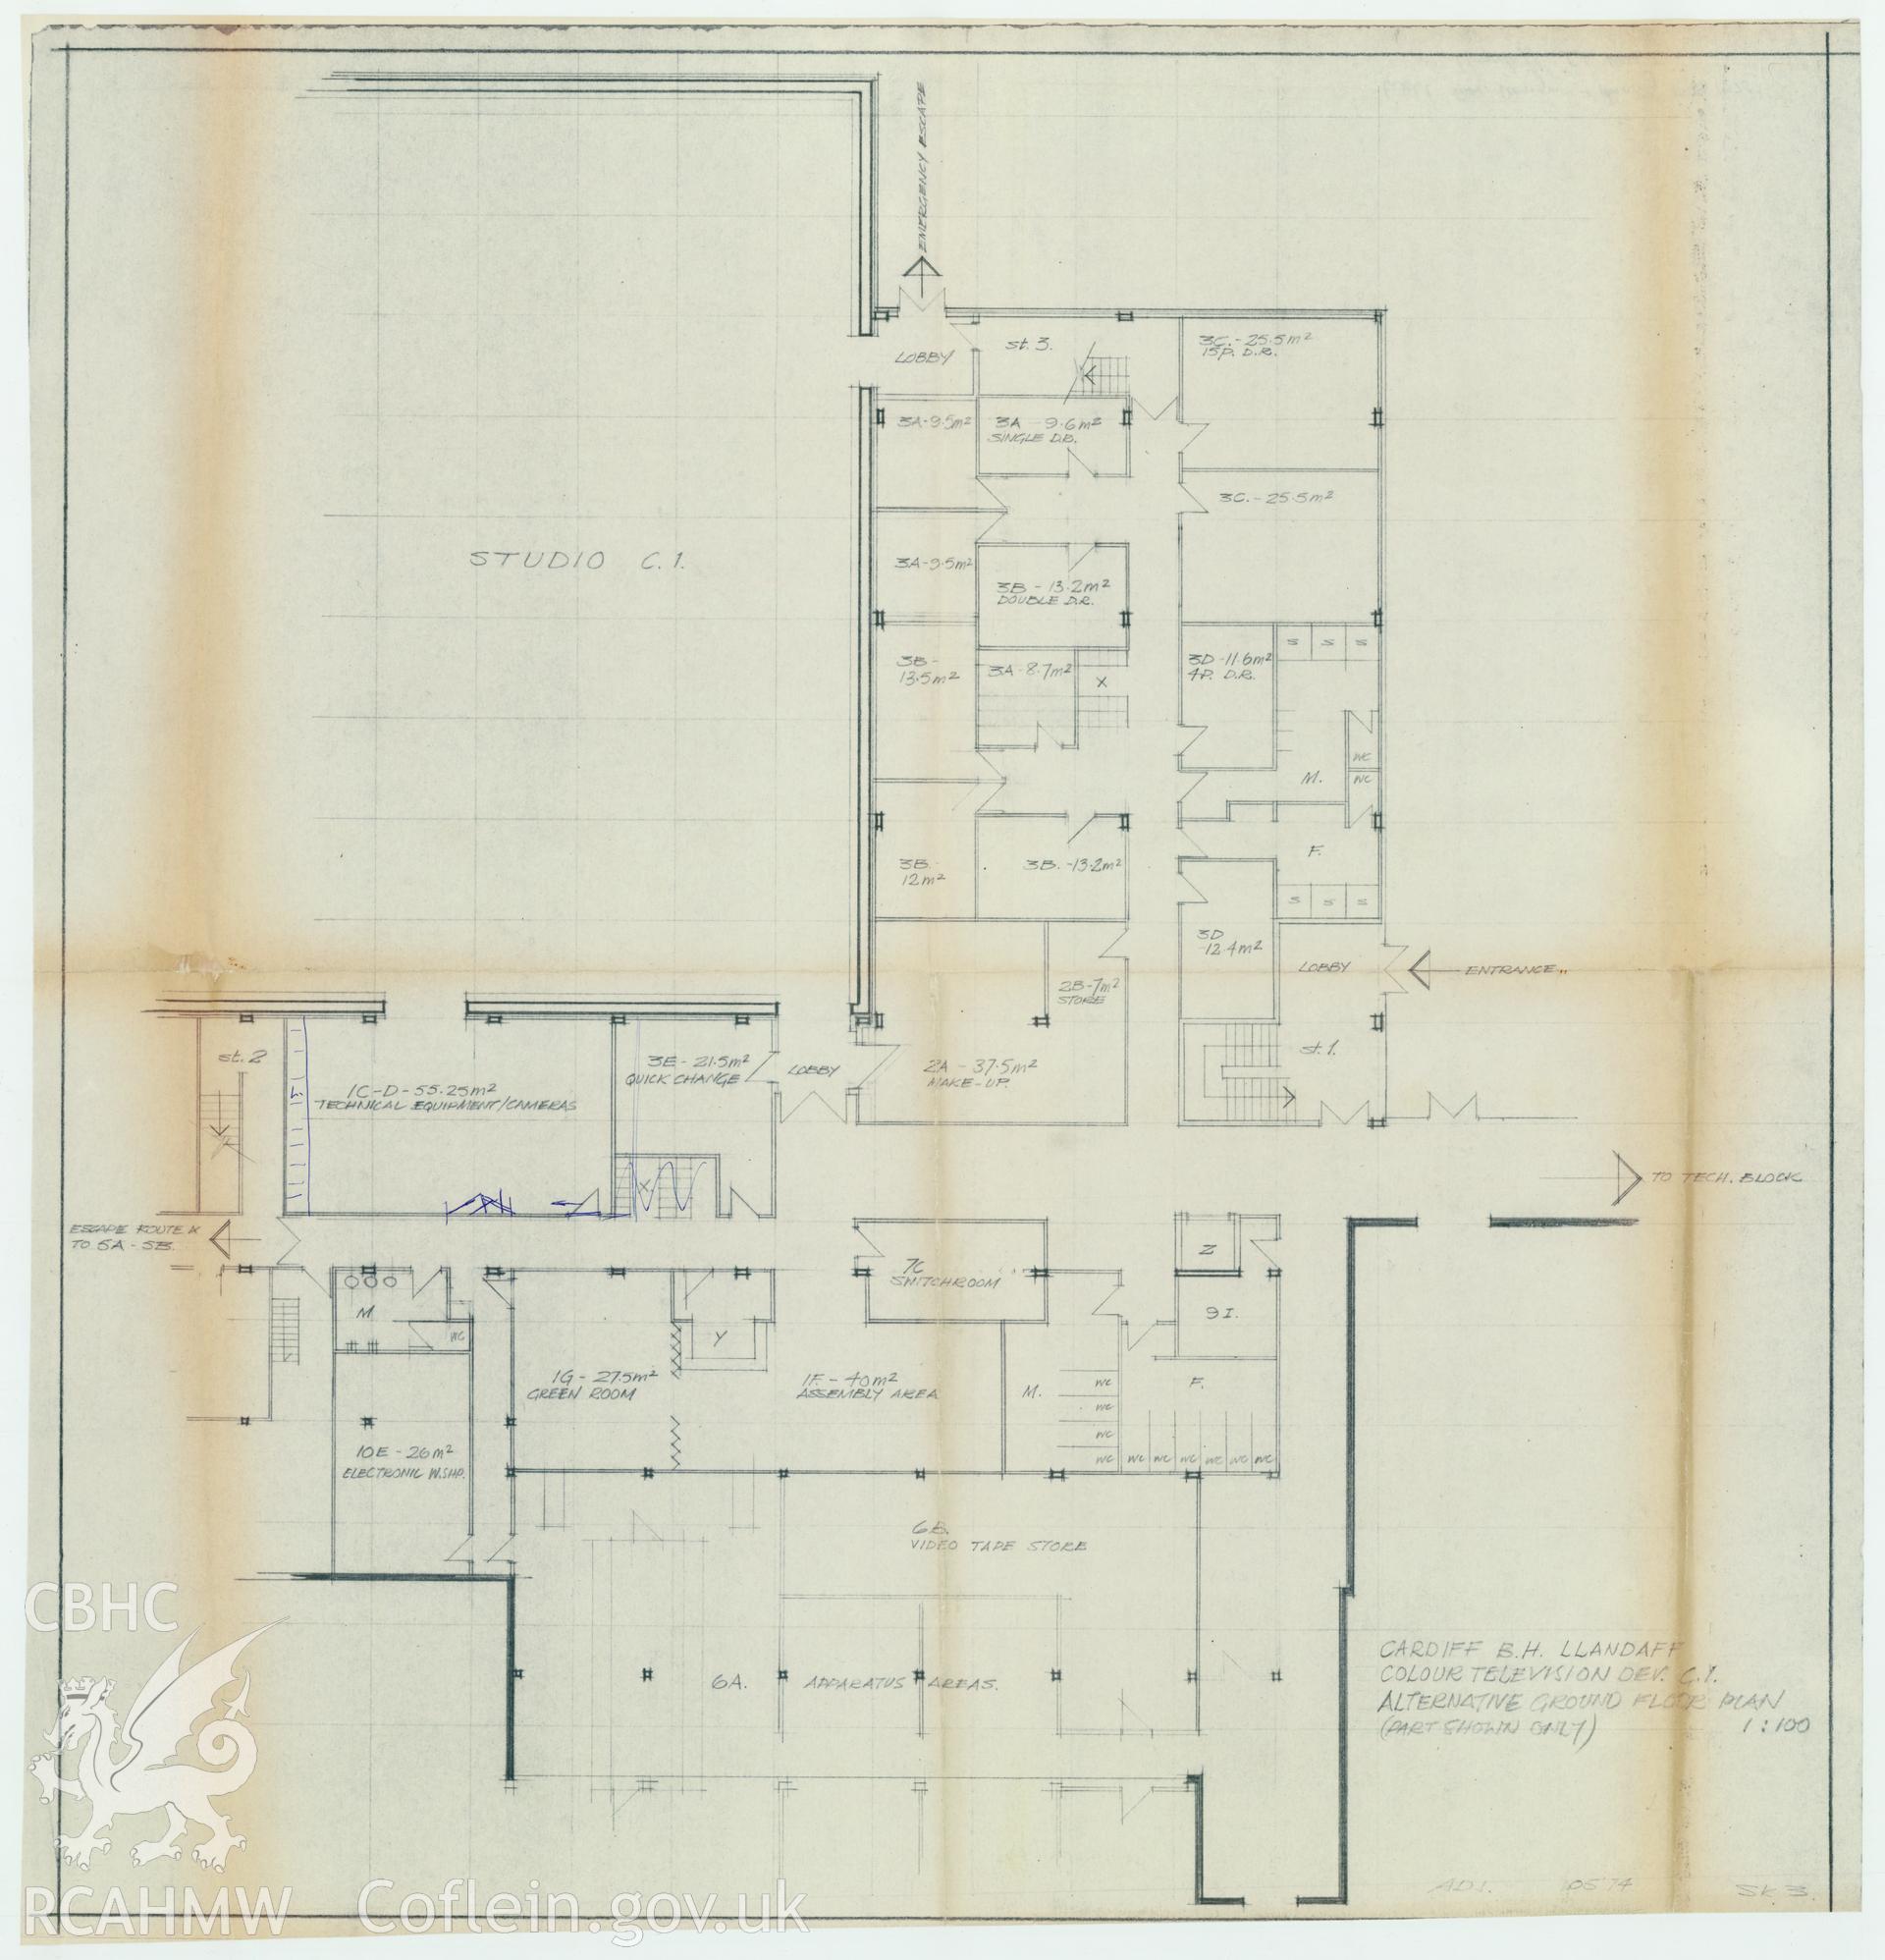 Digitised drawing plan of Llandaff production studio C1 - Colour TV Development, alternative ground floor plan. Drawing no. AD1 SK3. May 1974.